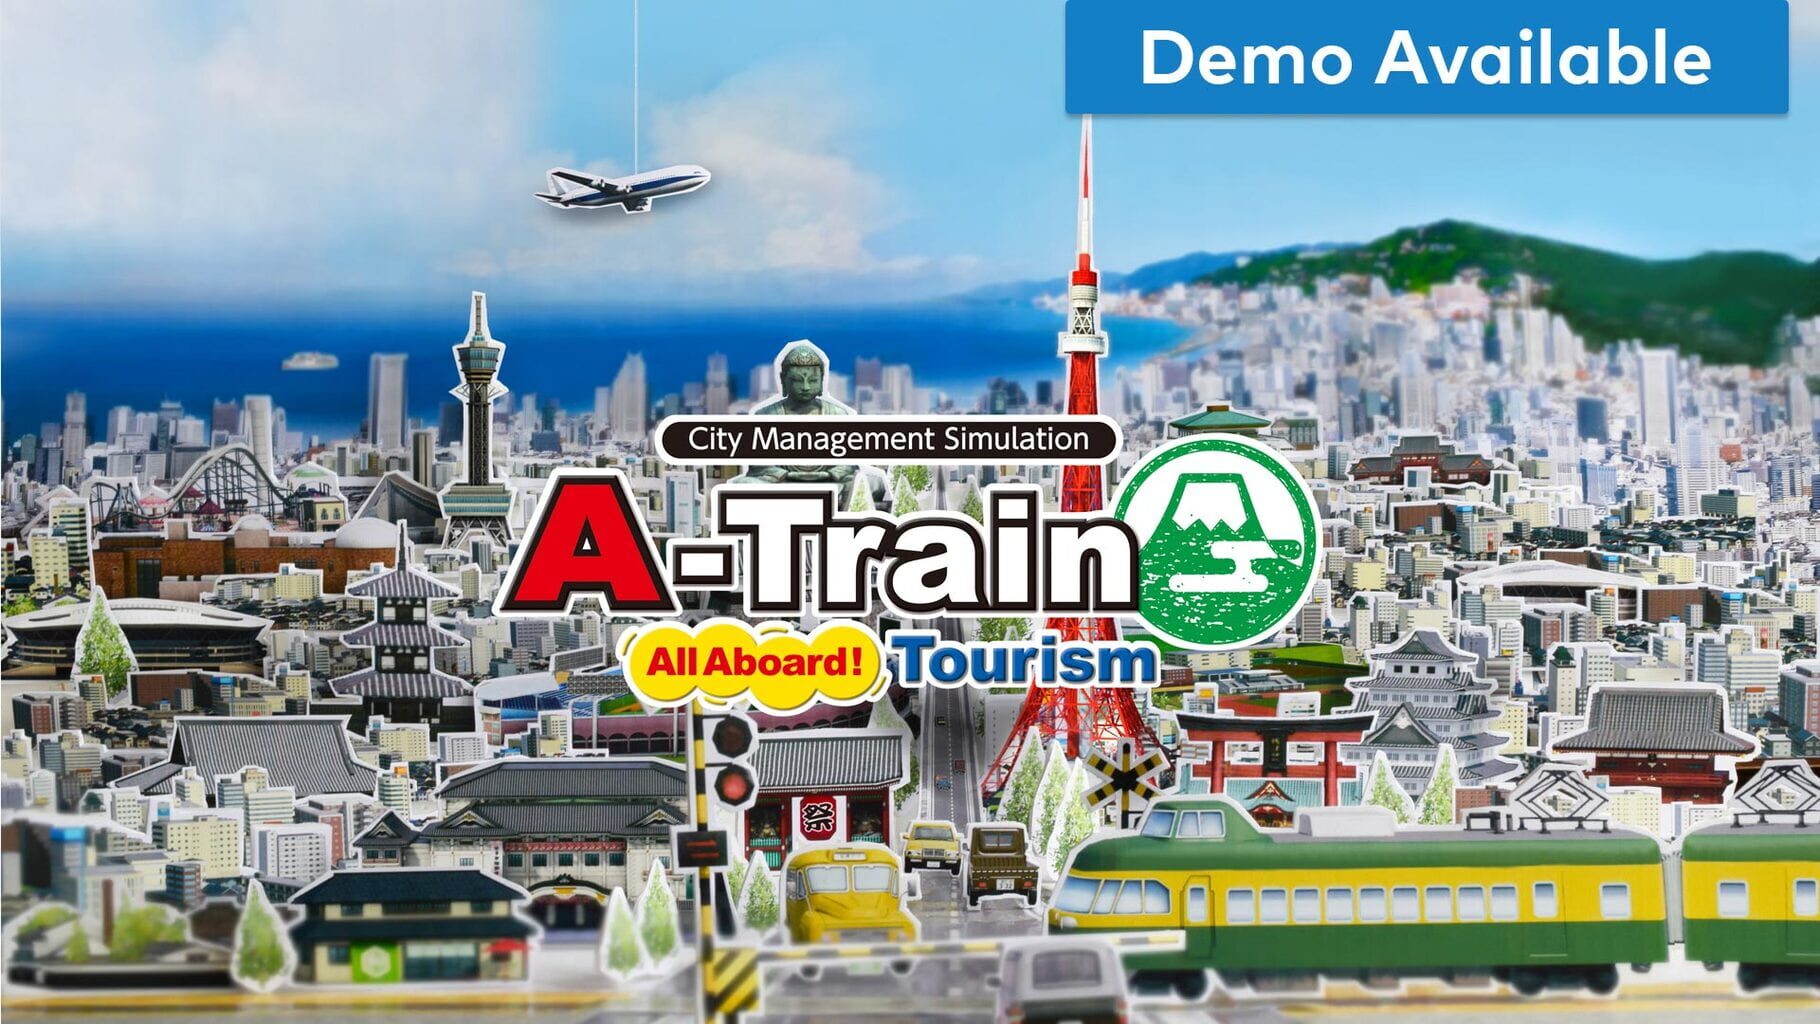 A-Train All Aboard! Tourism artwork